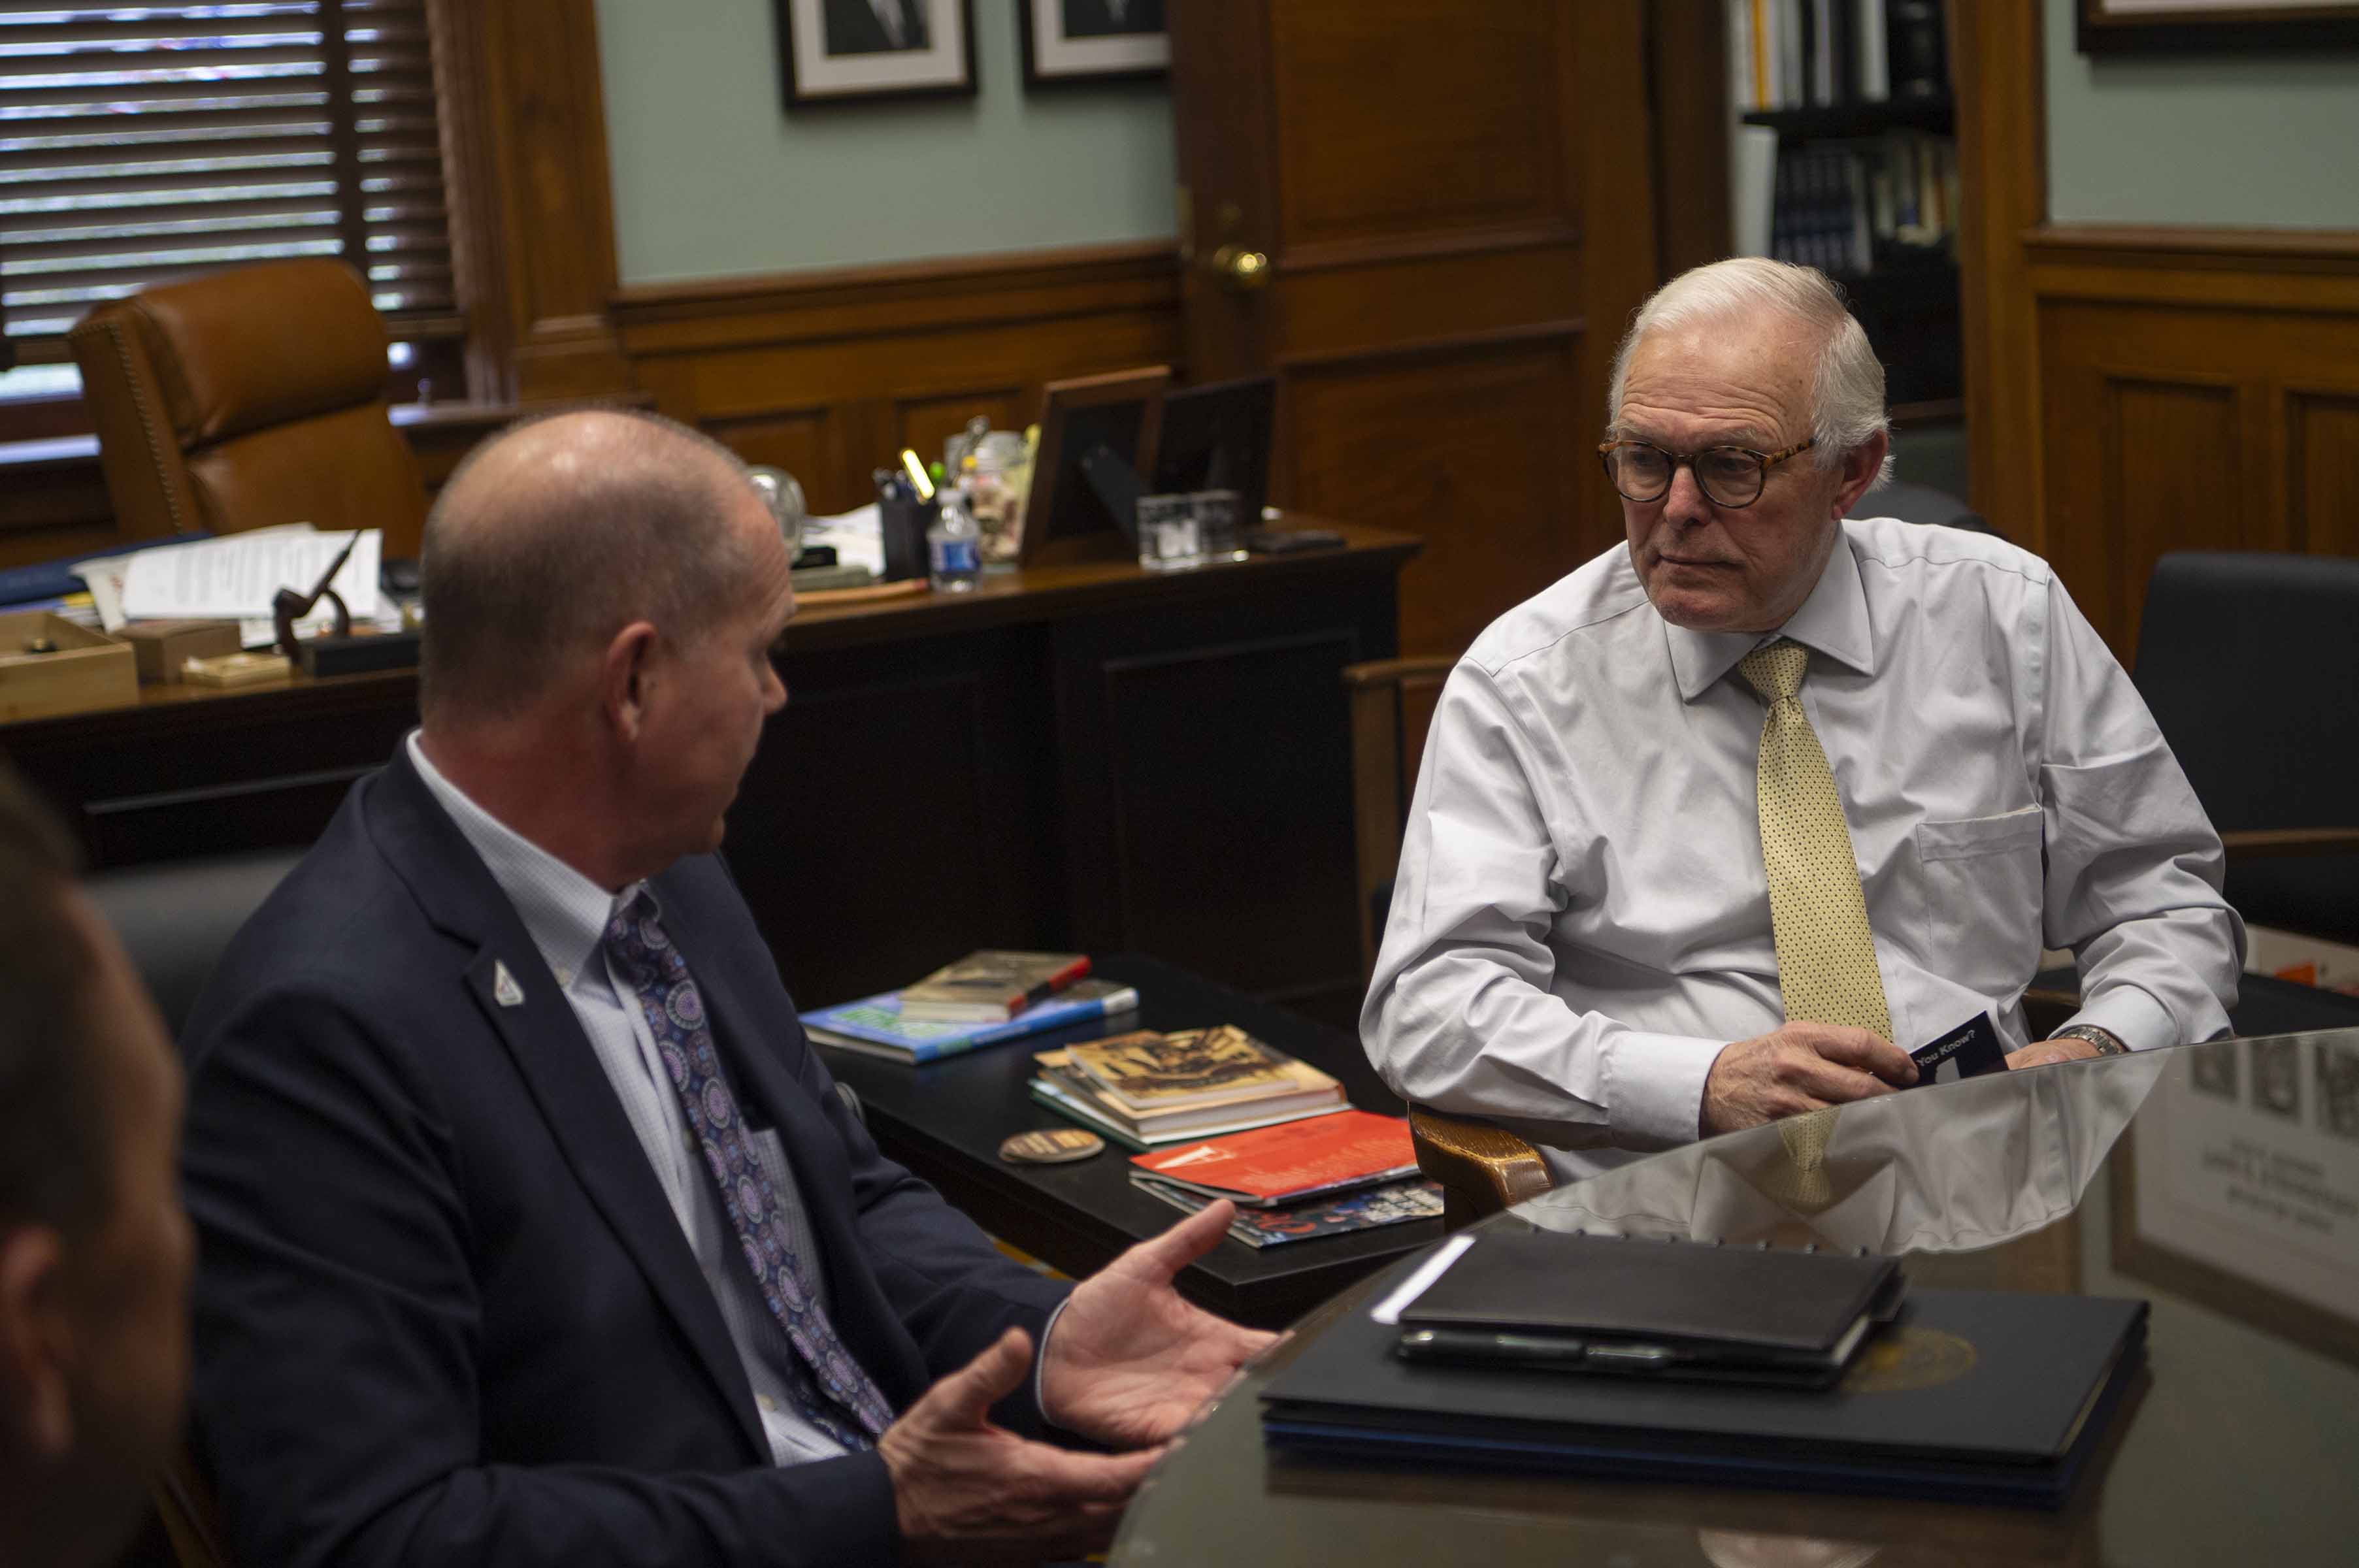 NASA Stennis Acting Center Director John Bailey talks with Mississippi Speaker Pro Tempore Manly Barton